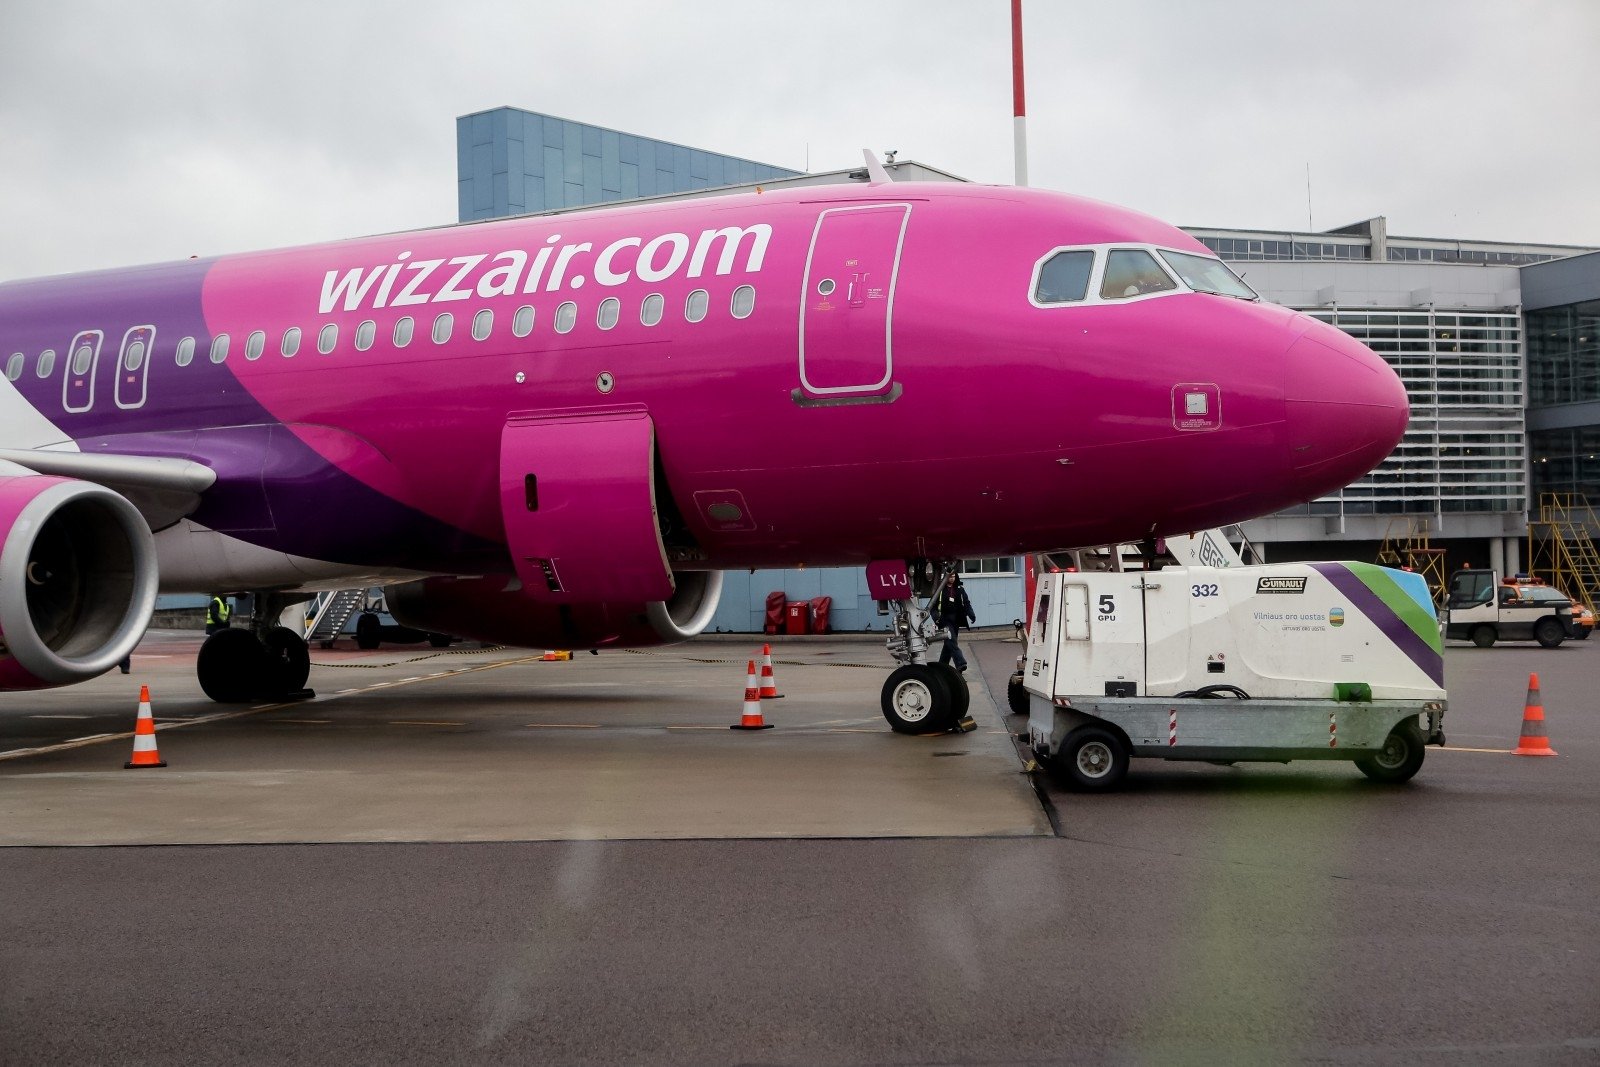 W iz. Самолеты Визз Эйр. Лоукостер Wizz Air. Wizz Air Авиапарк. Wizz Air самолеты компании.